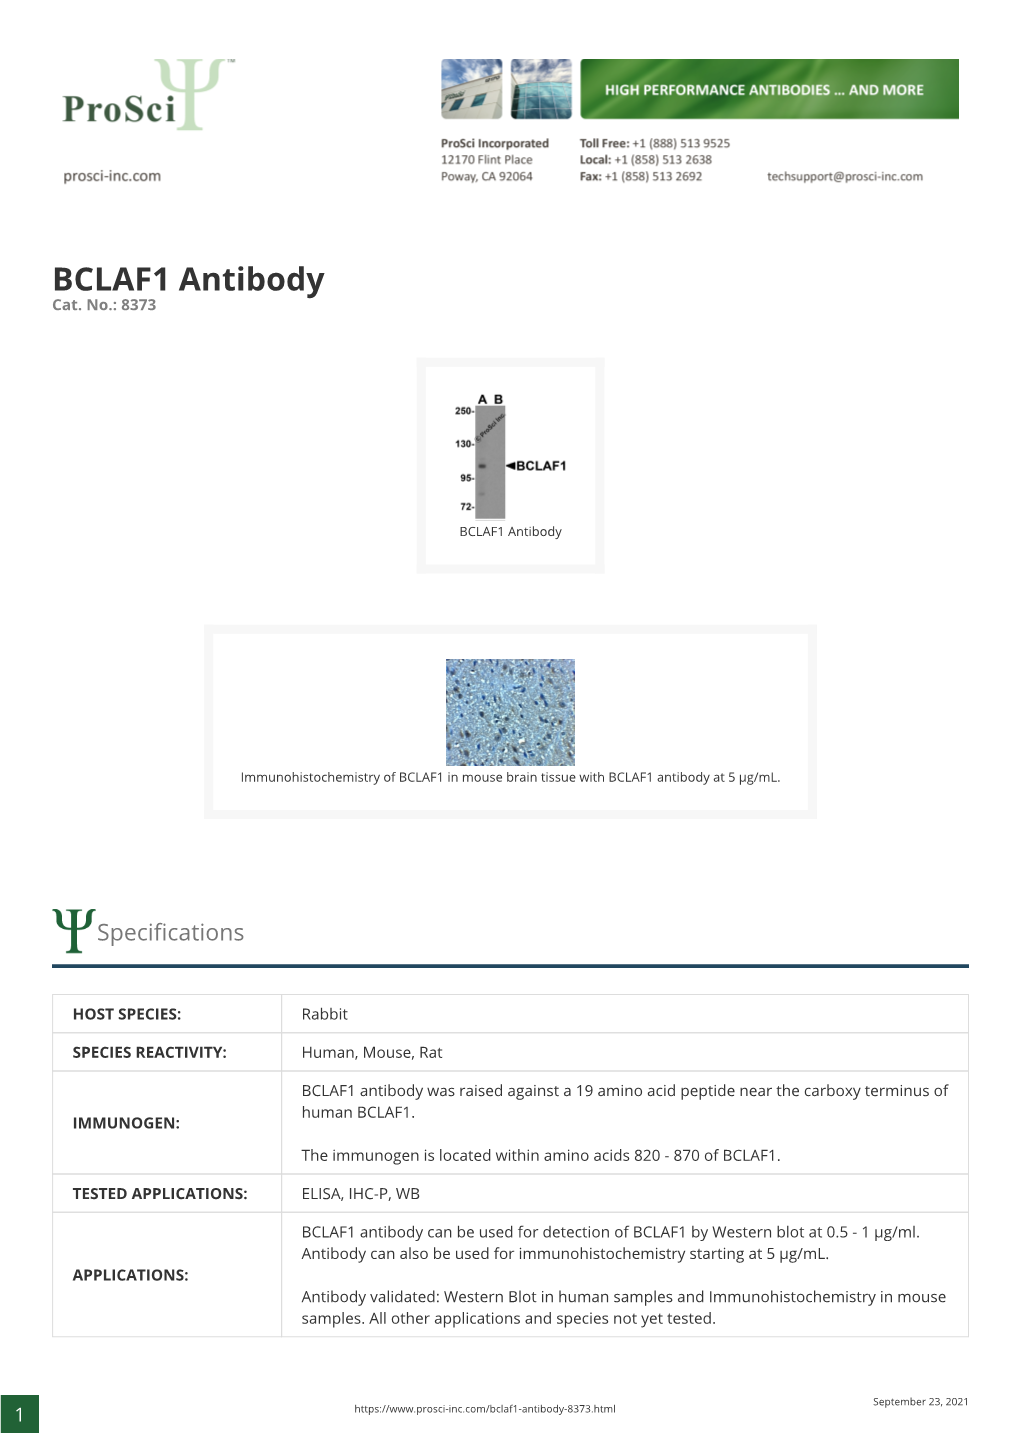 BCLAF1 Antibody Cat